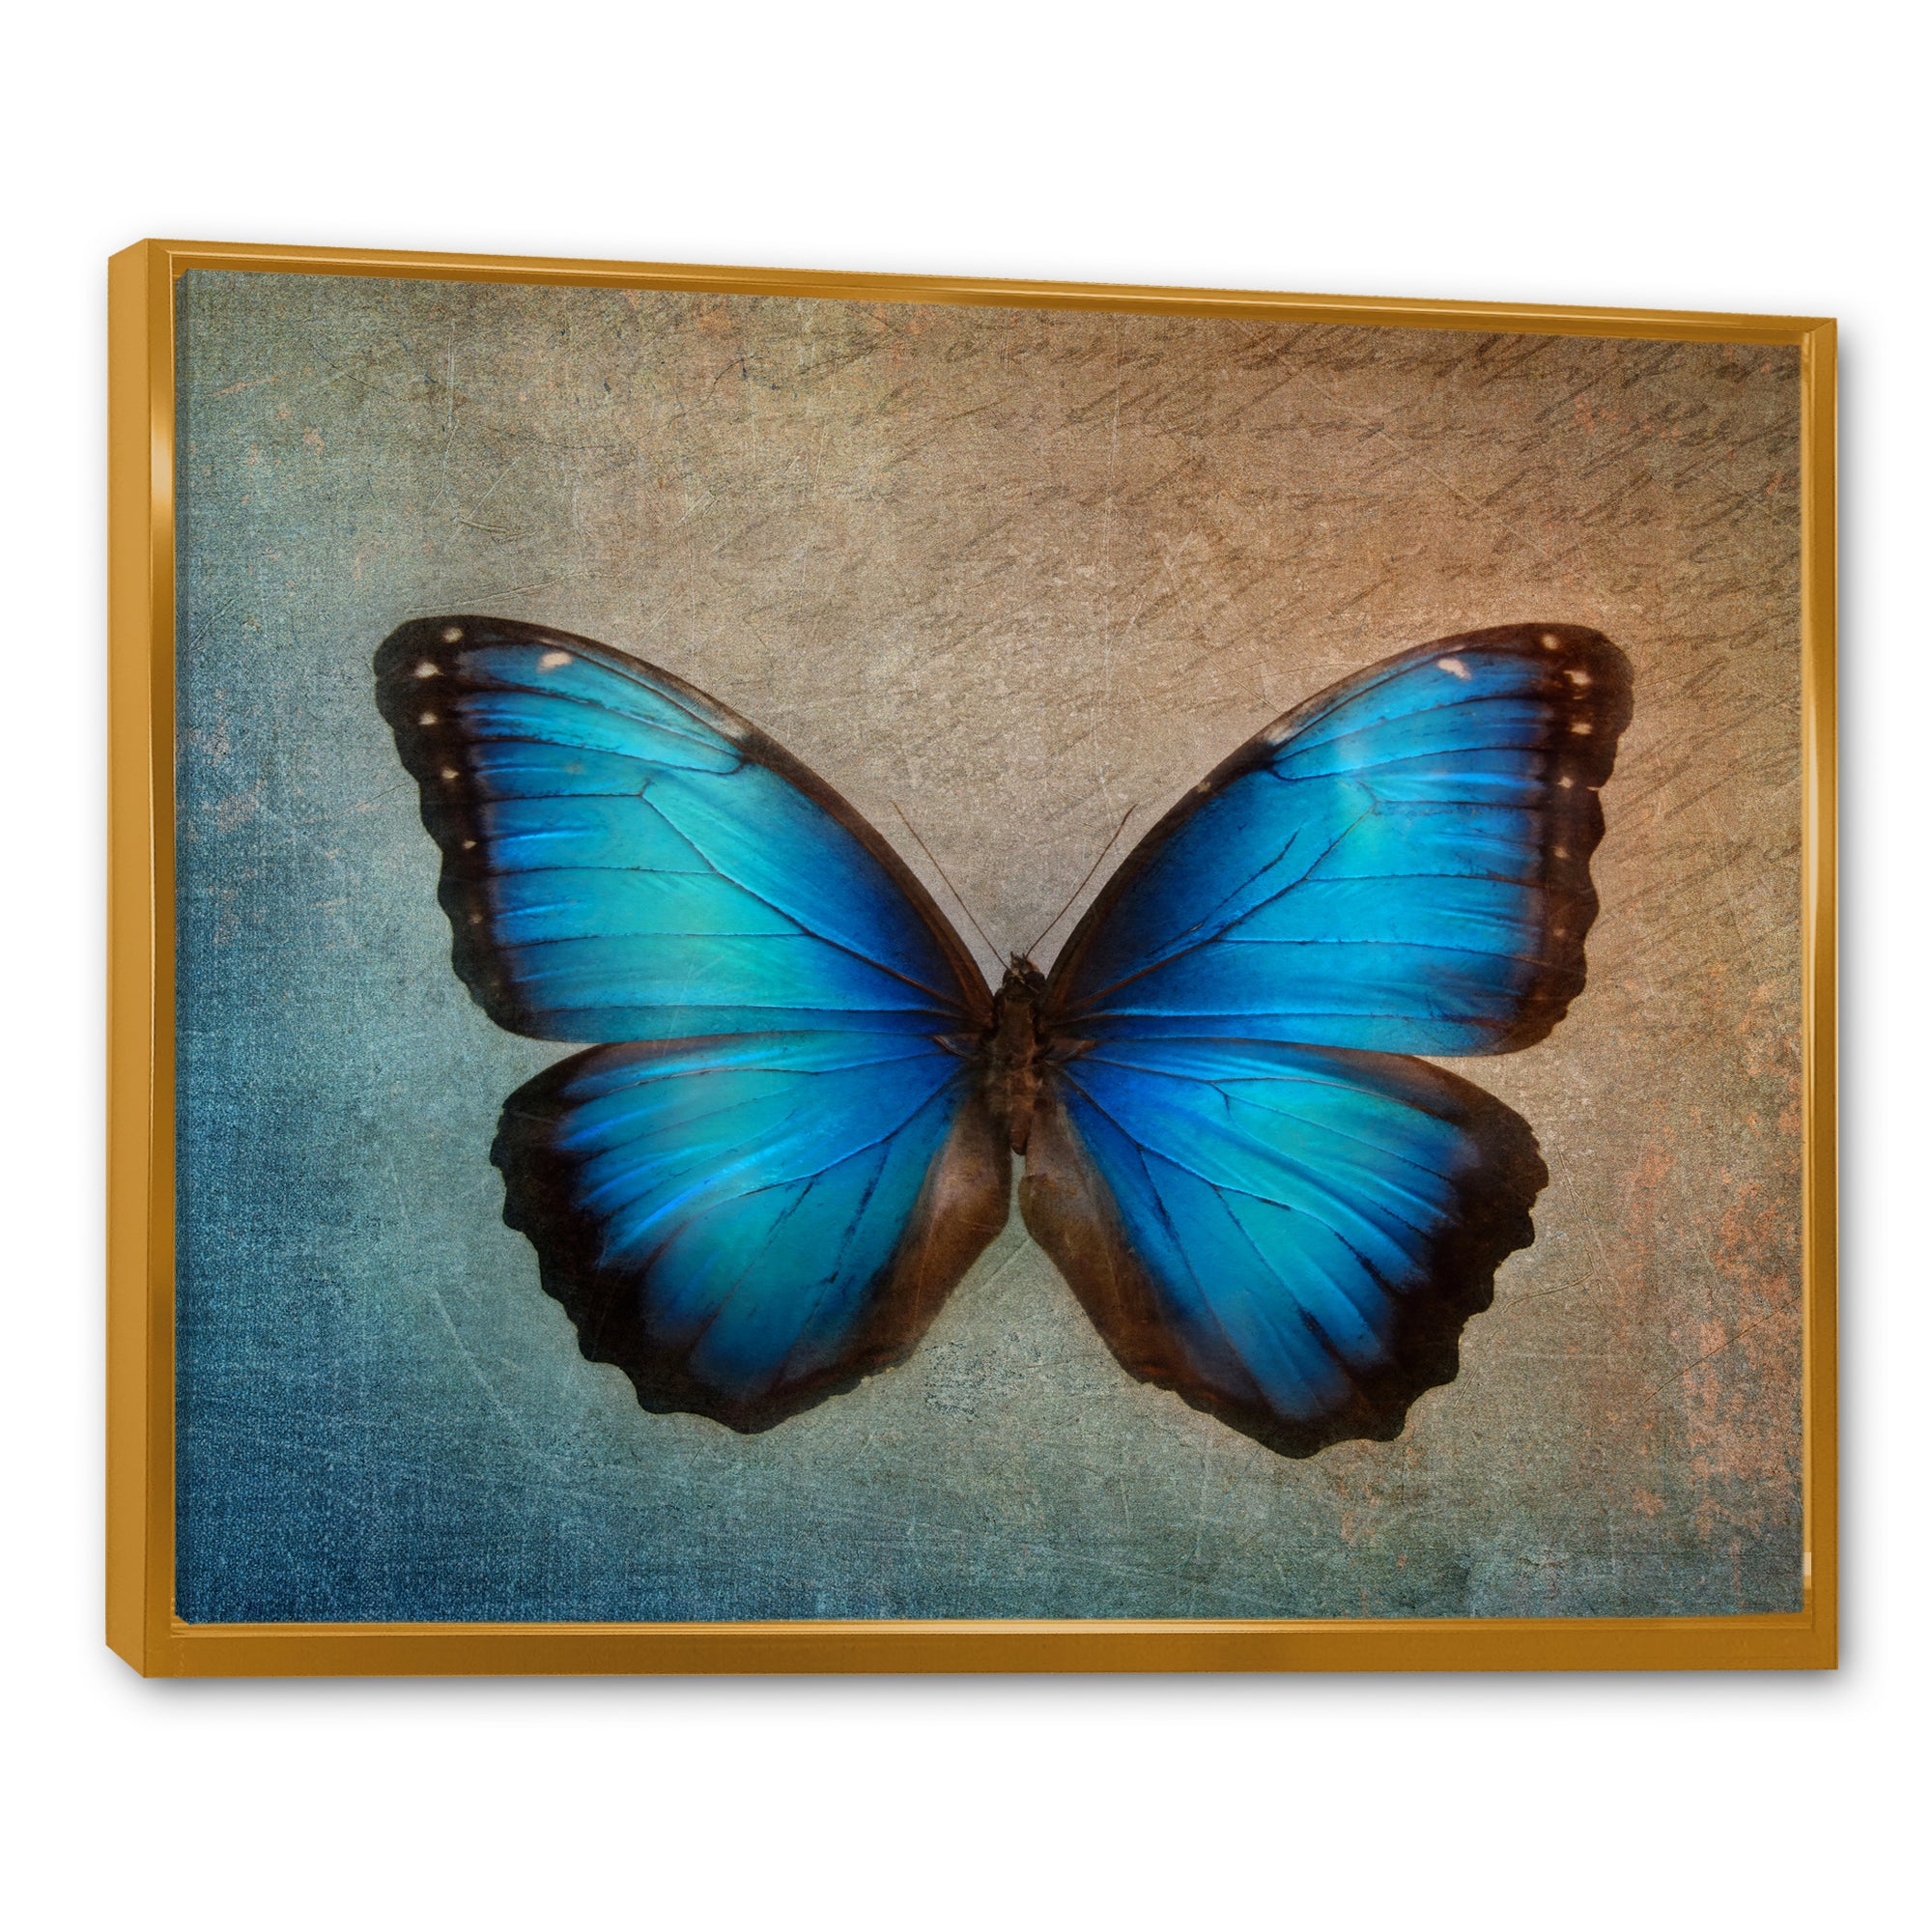 Blue Vintage Butterfly